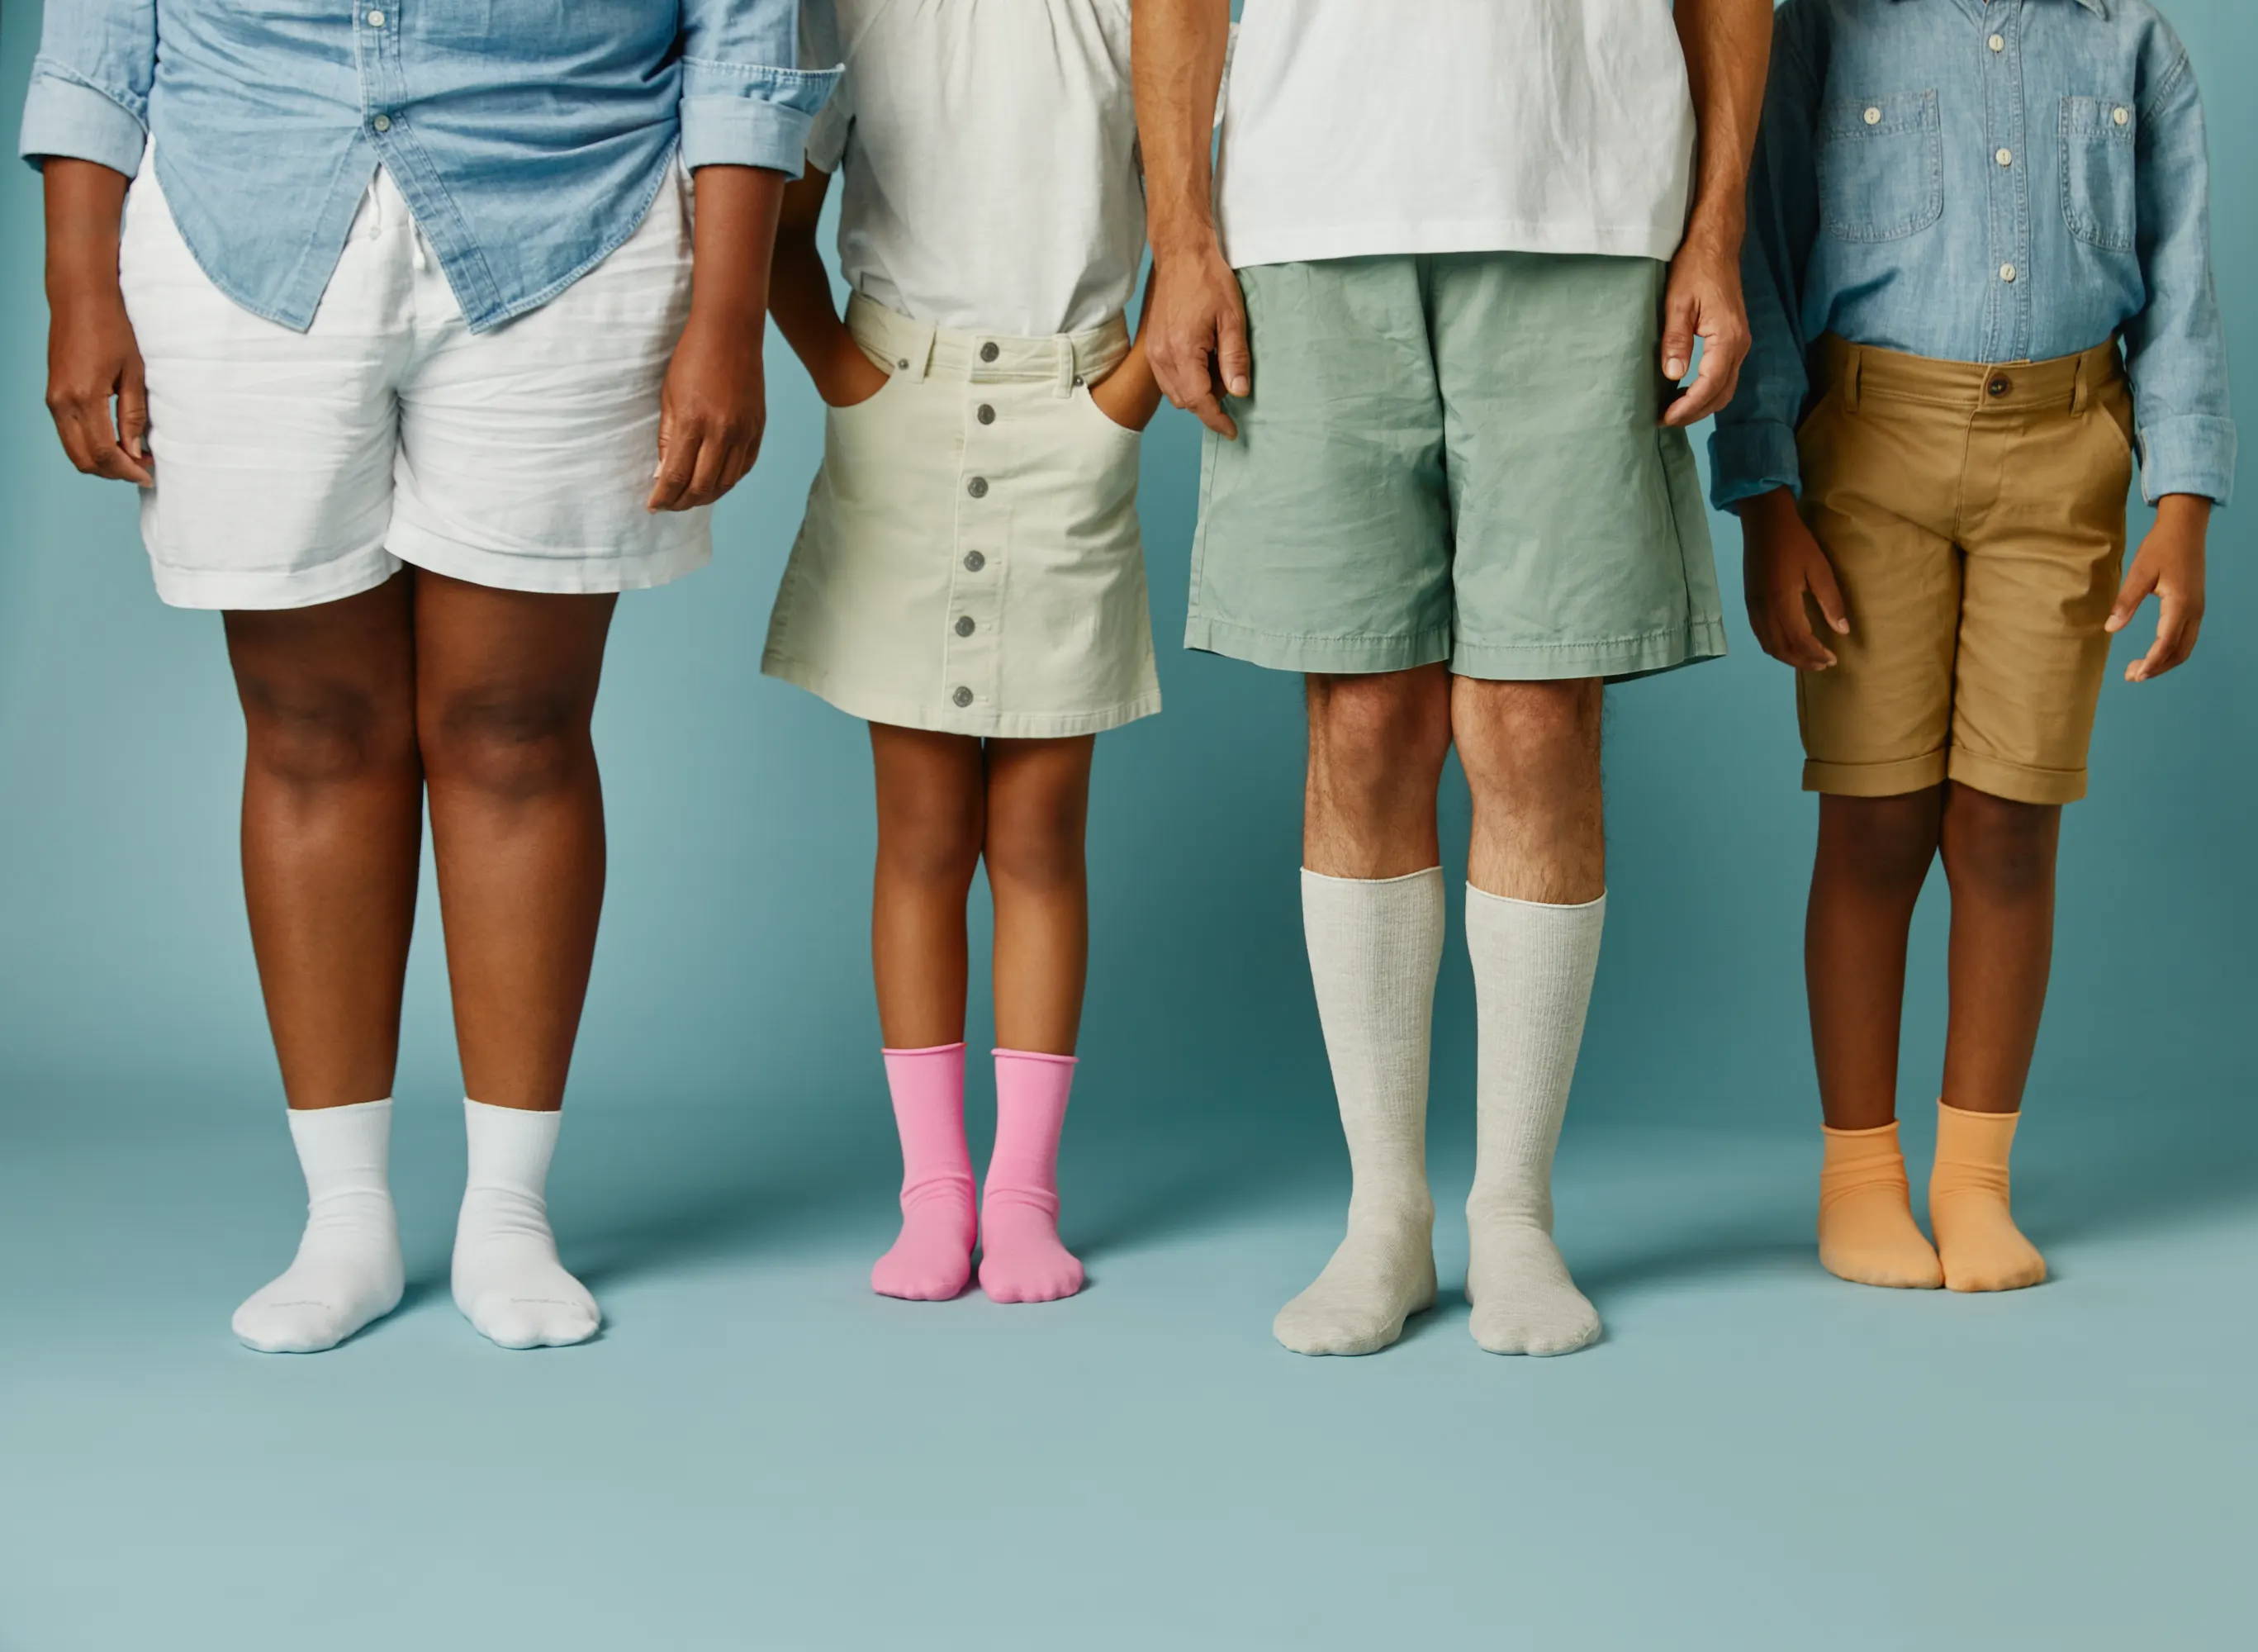 Family standing wearing SmartKnit socks and SmartKnitKIDS socks